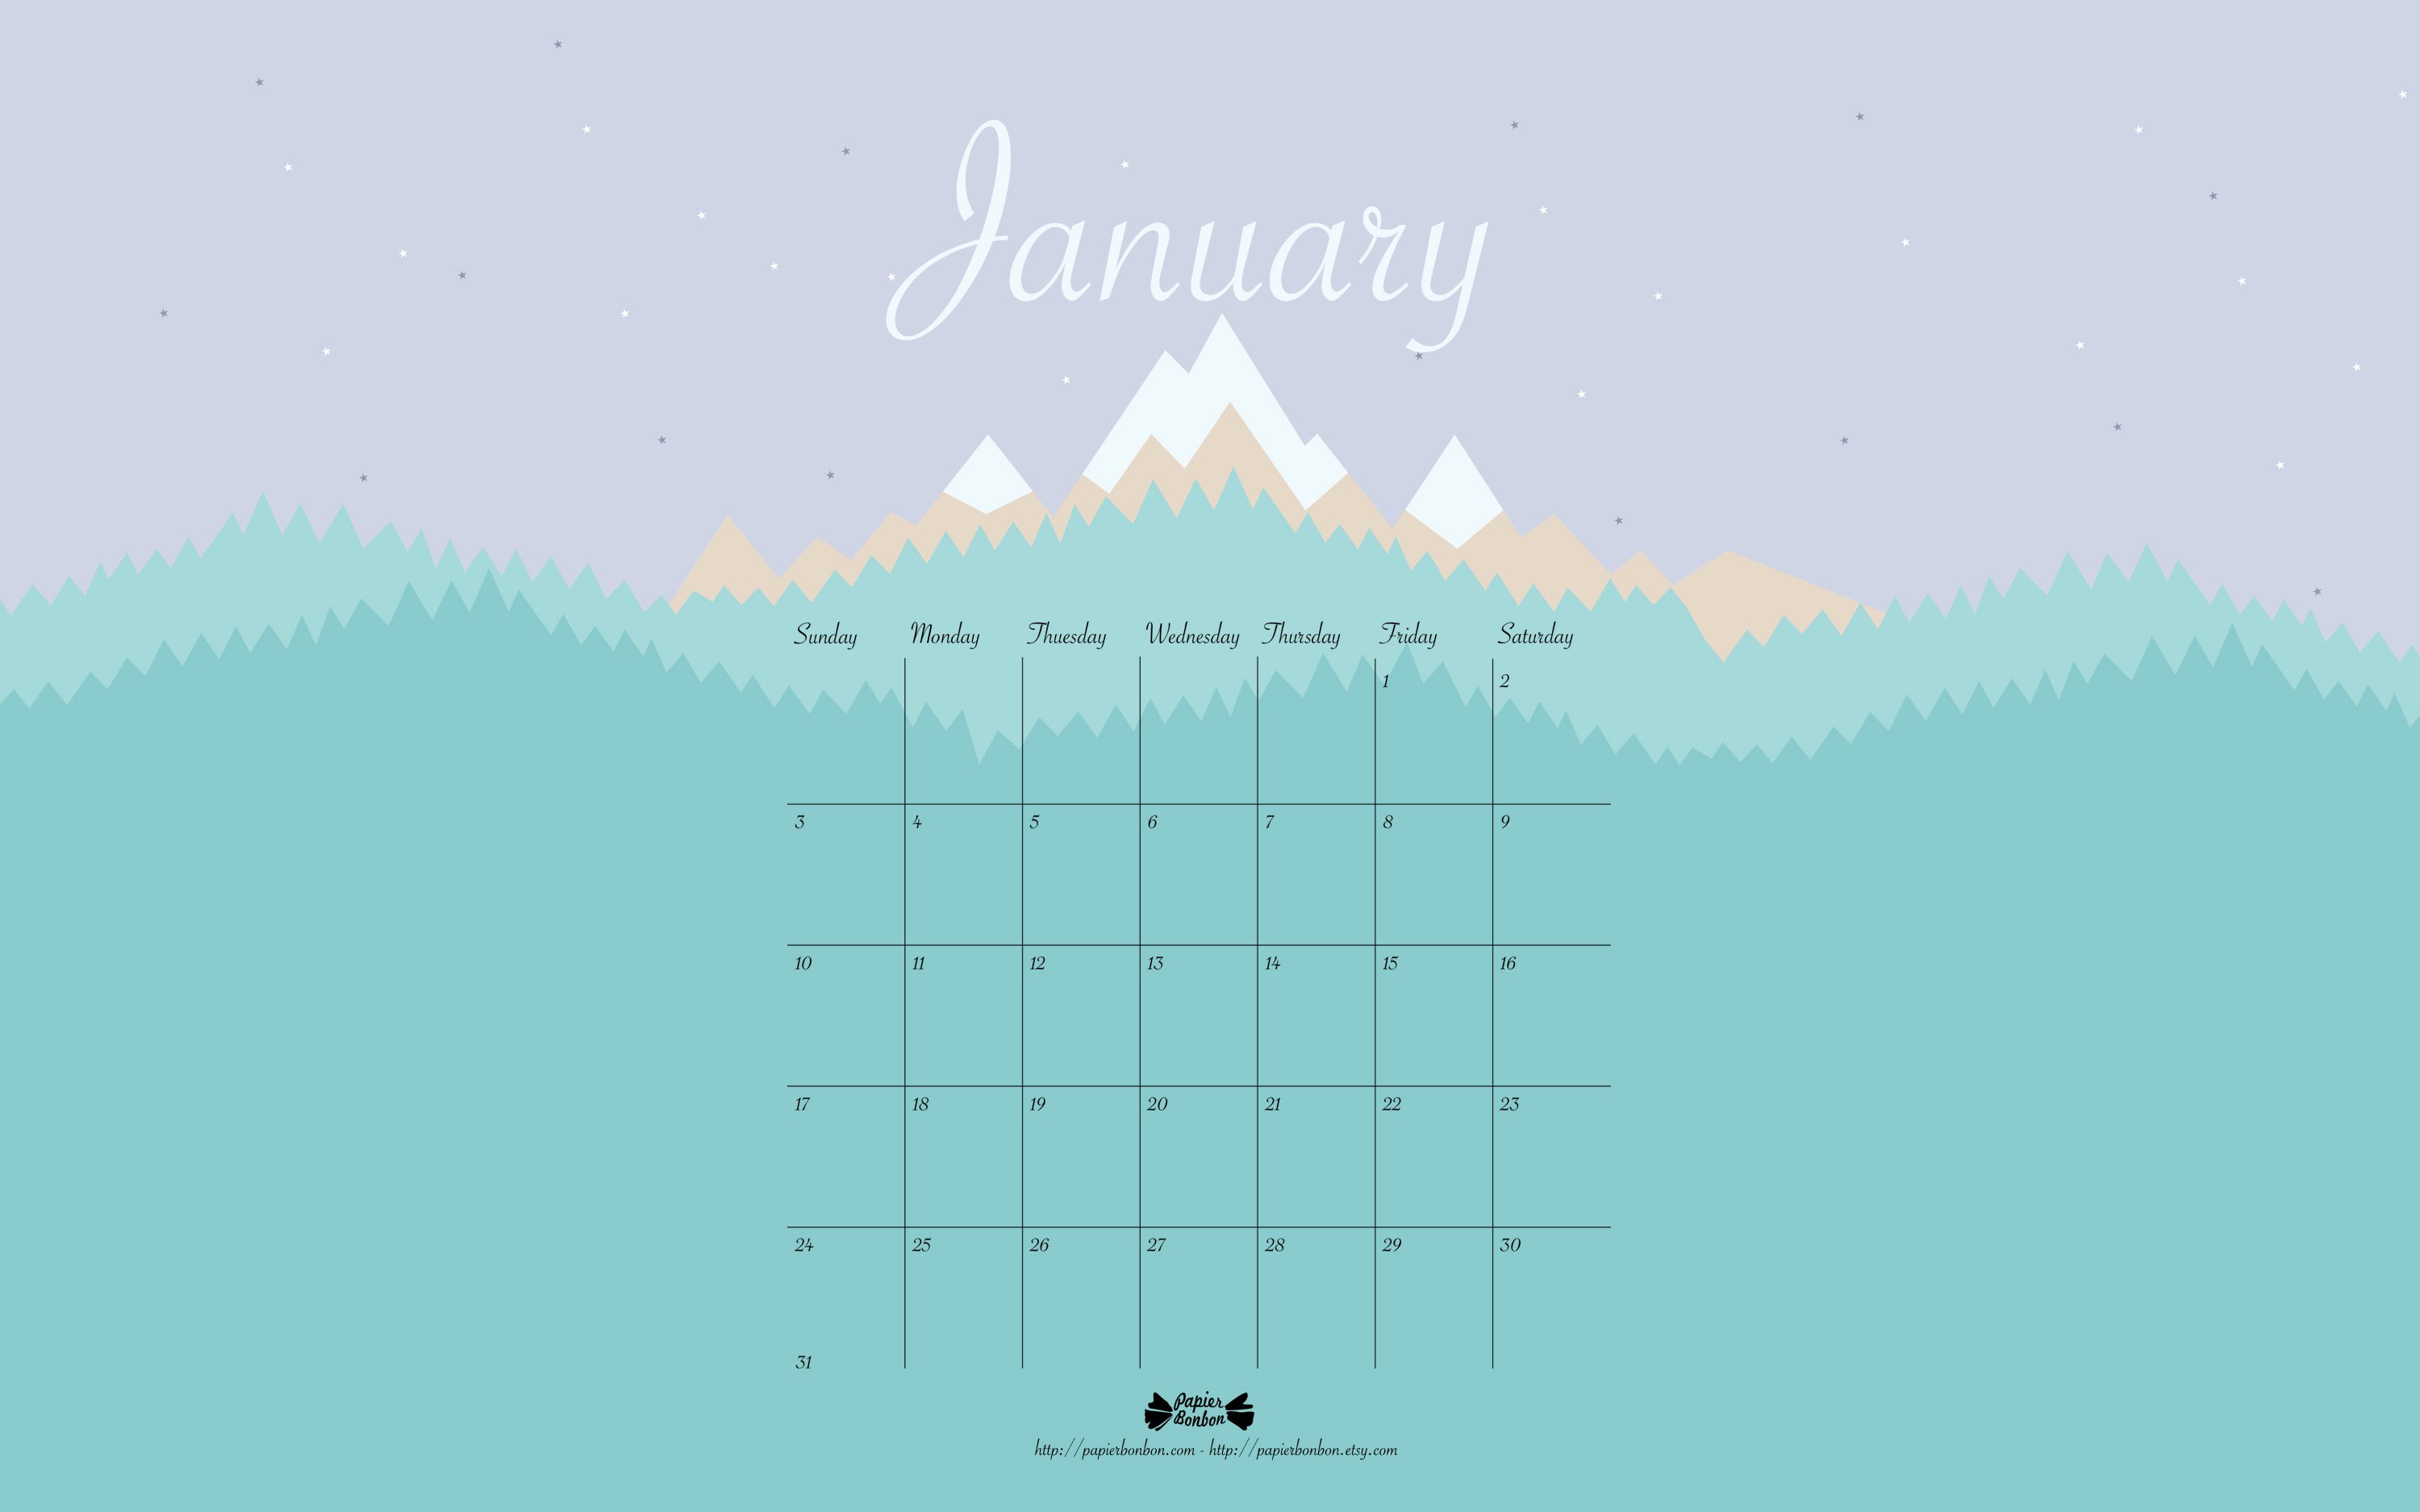 2016 January Wallpaper Calendar 2016 Happy Holidays Day 2016